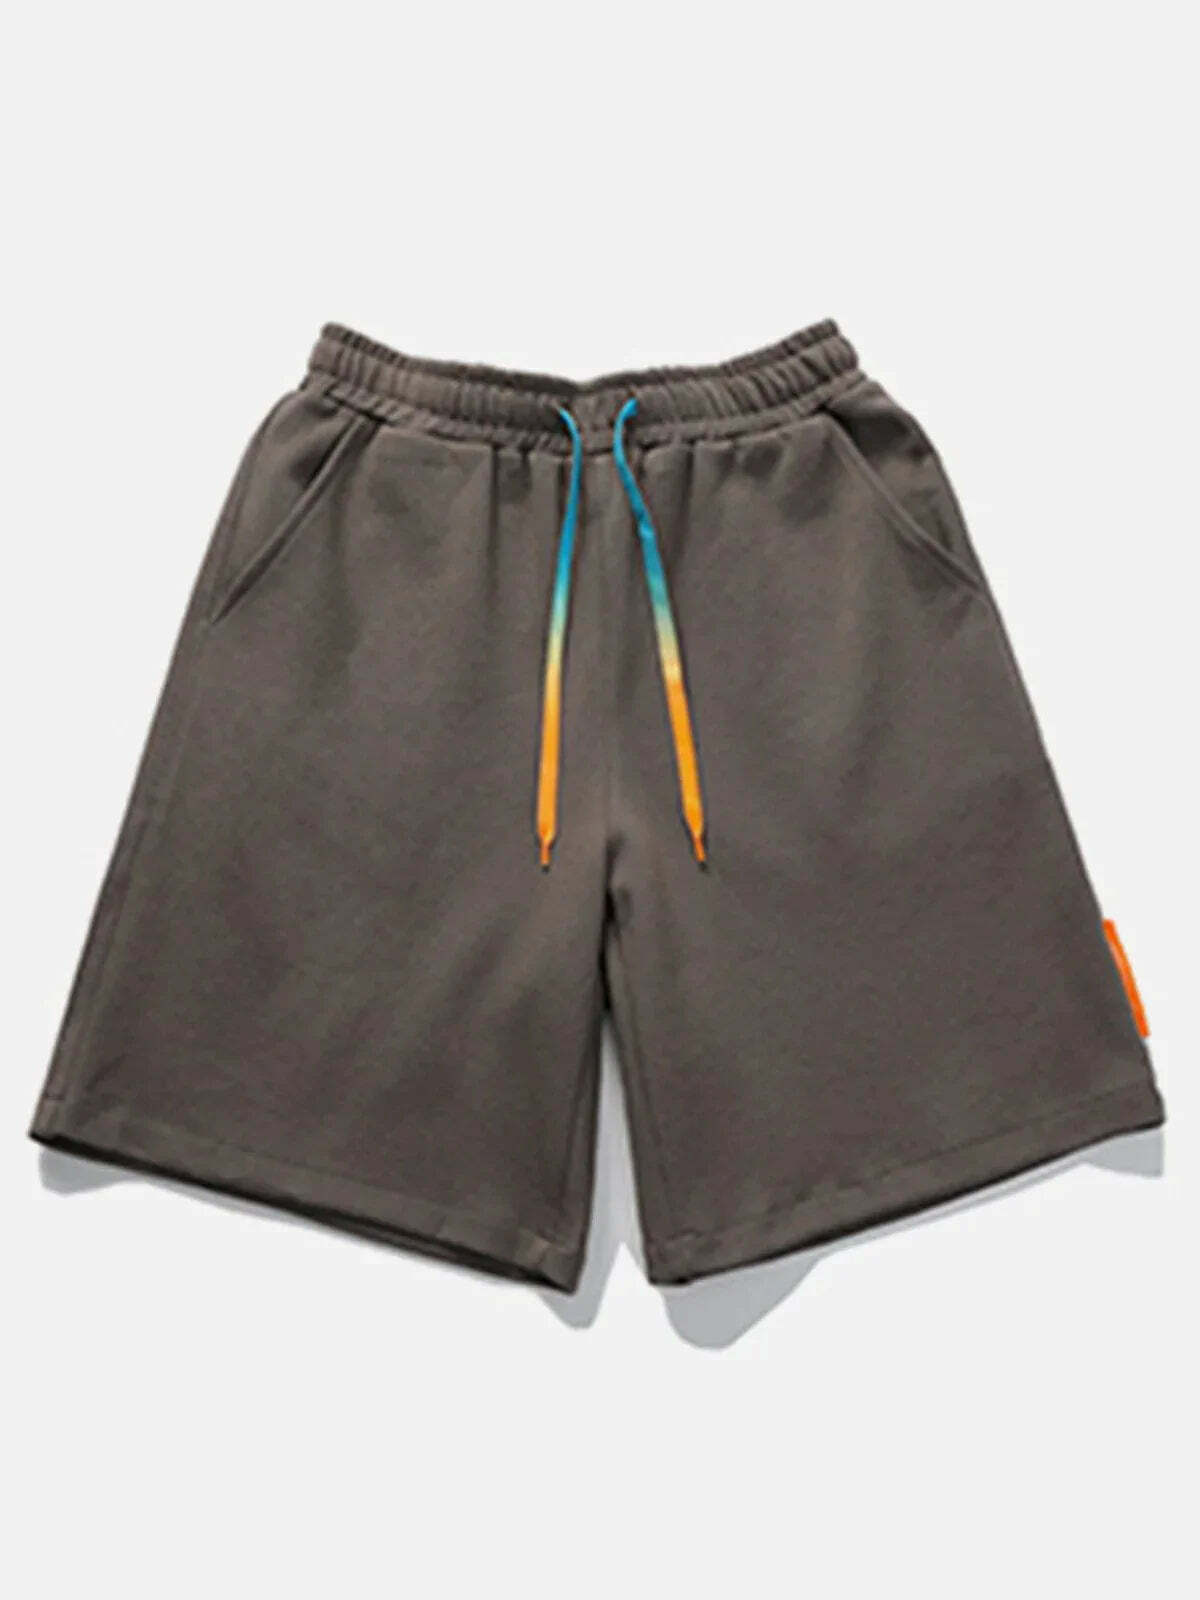 colored drawstring shorts youthful & custom design 5446